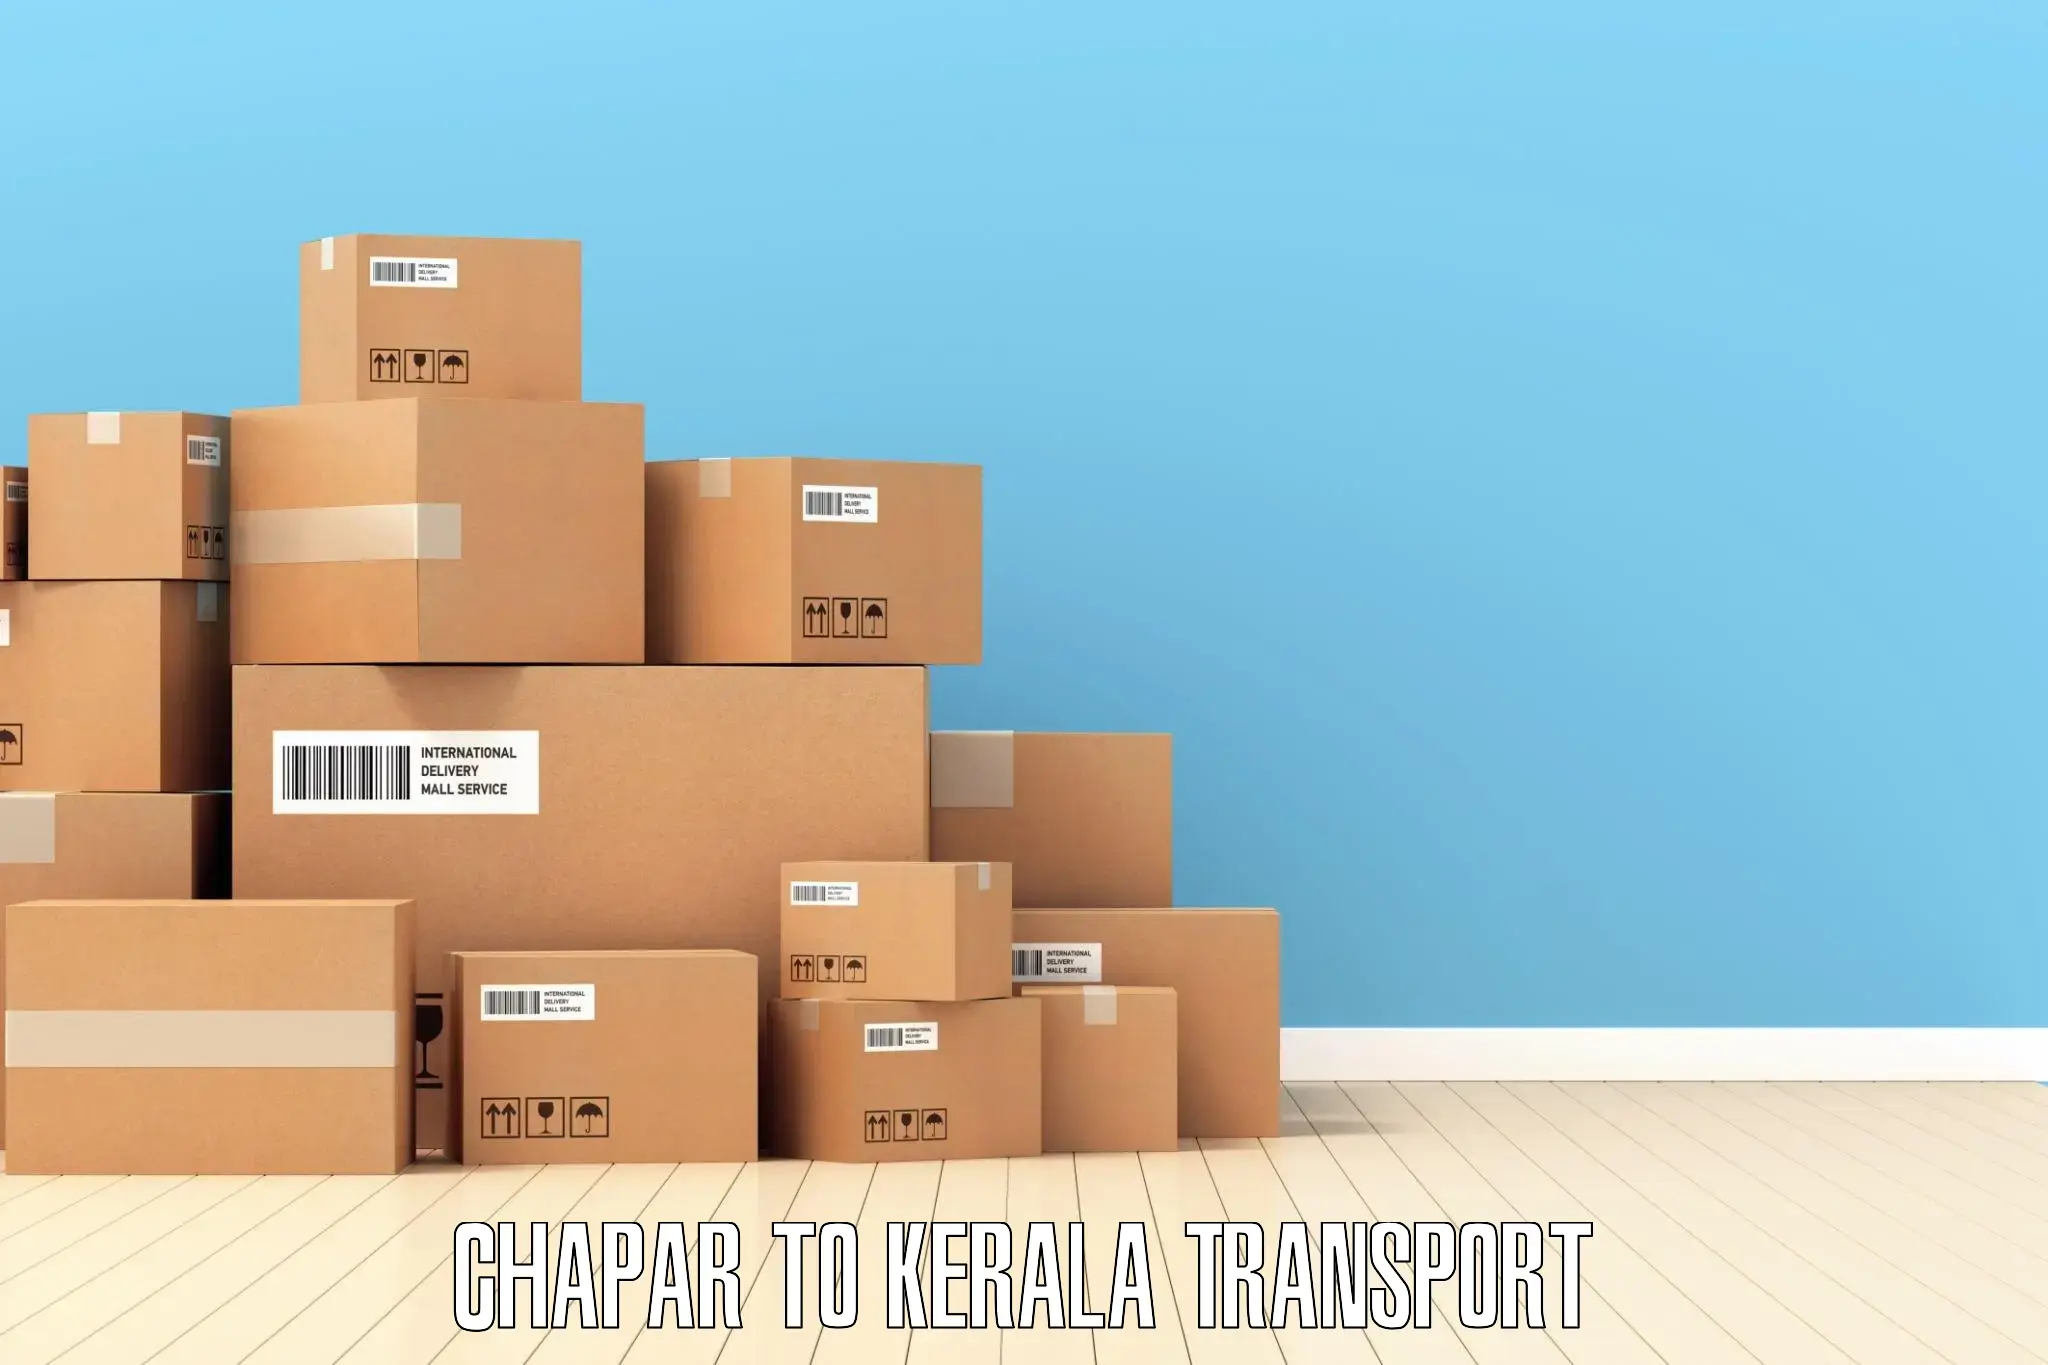 Online transport service Chapar to Kochi